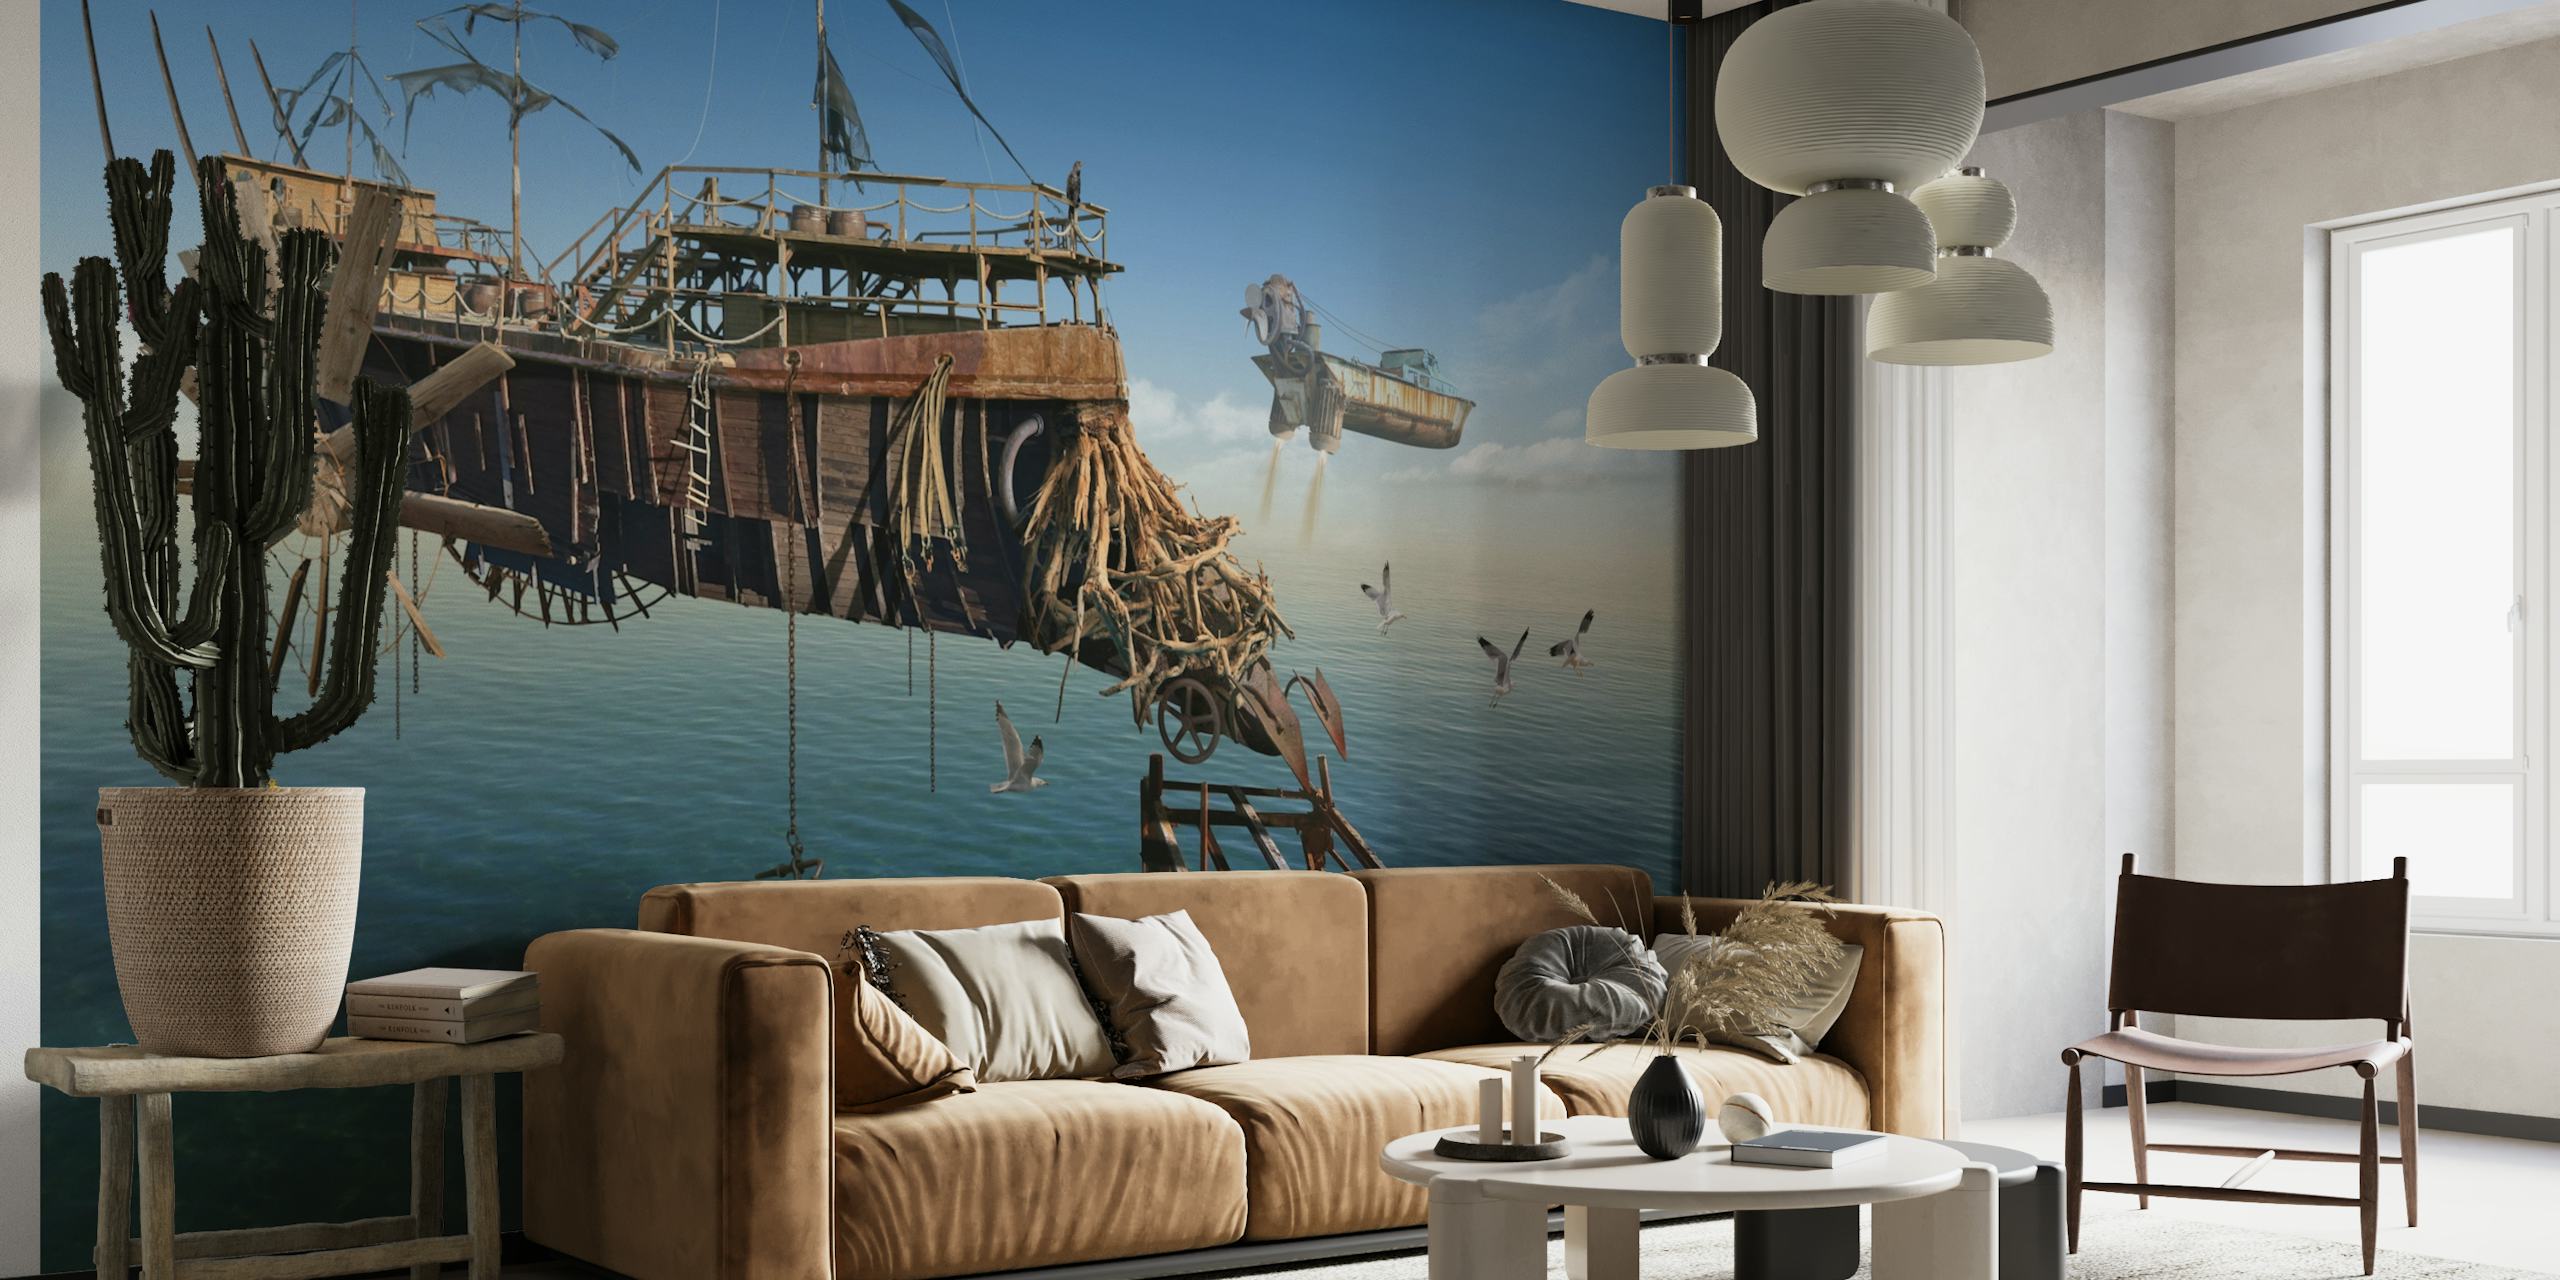 The old seafarer wallpaper